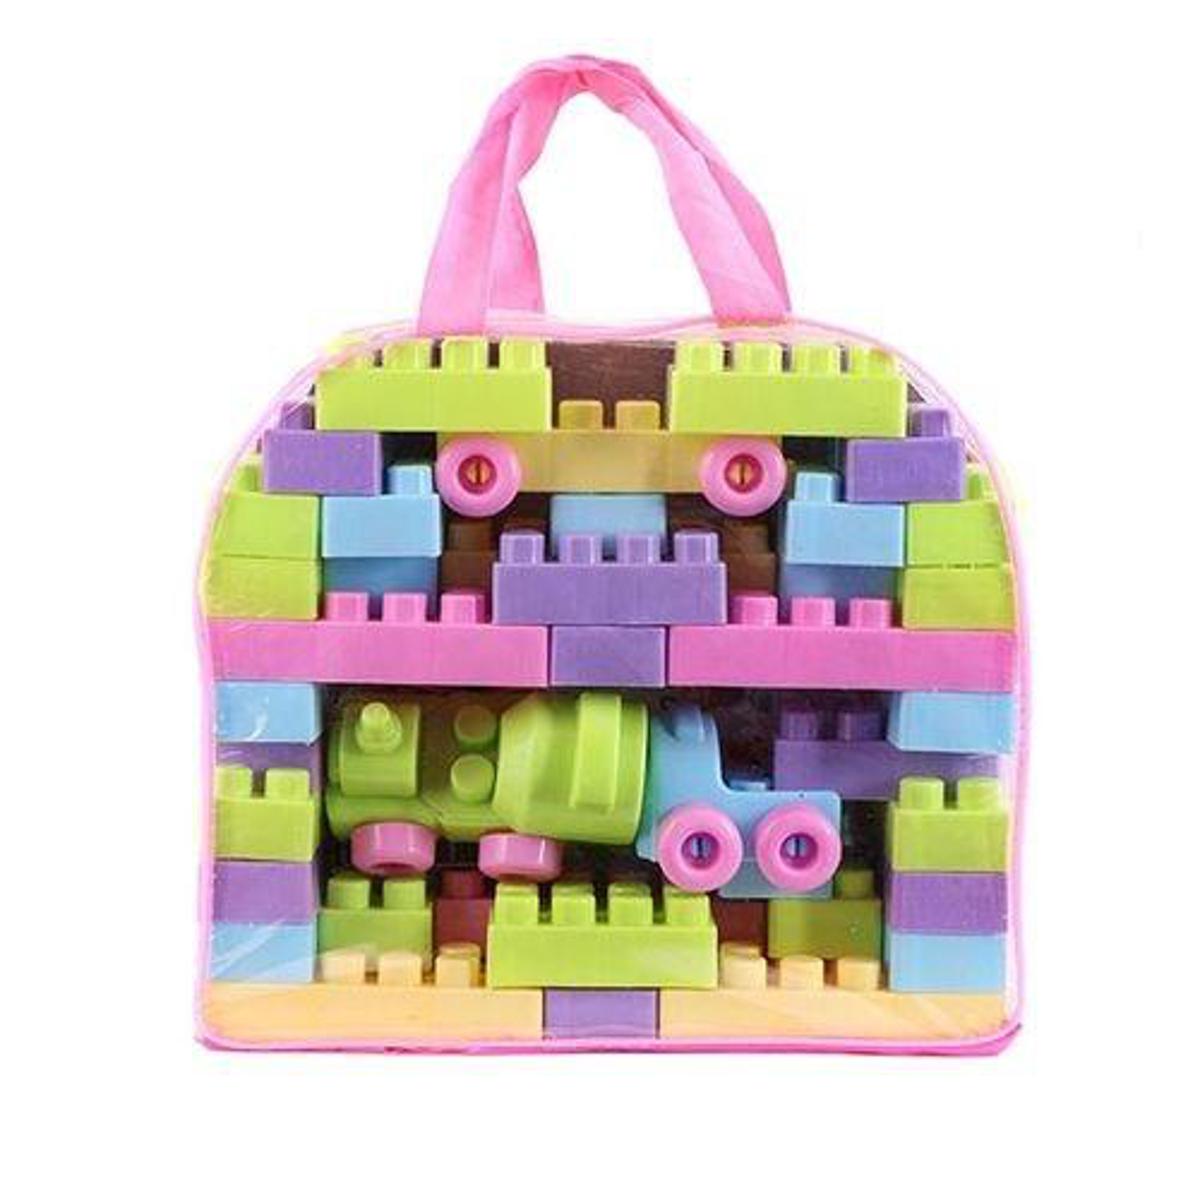 Educational Building Train Blocks Lego Set For Kids Plastic Building Block Set Toy For Kids (Multicolor)